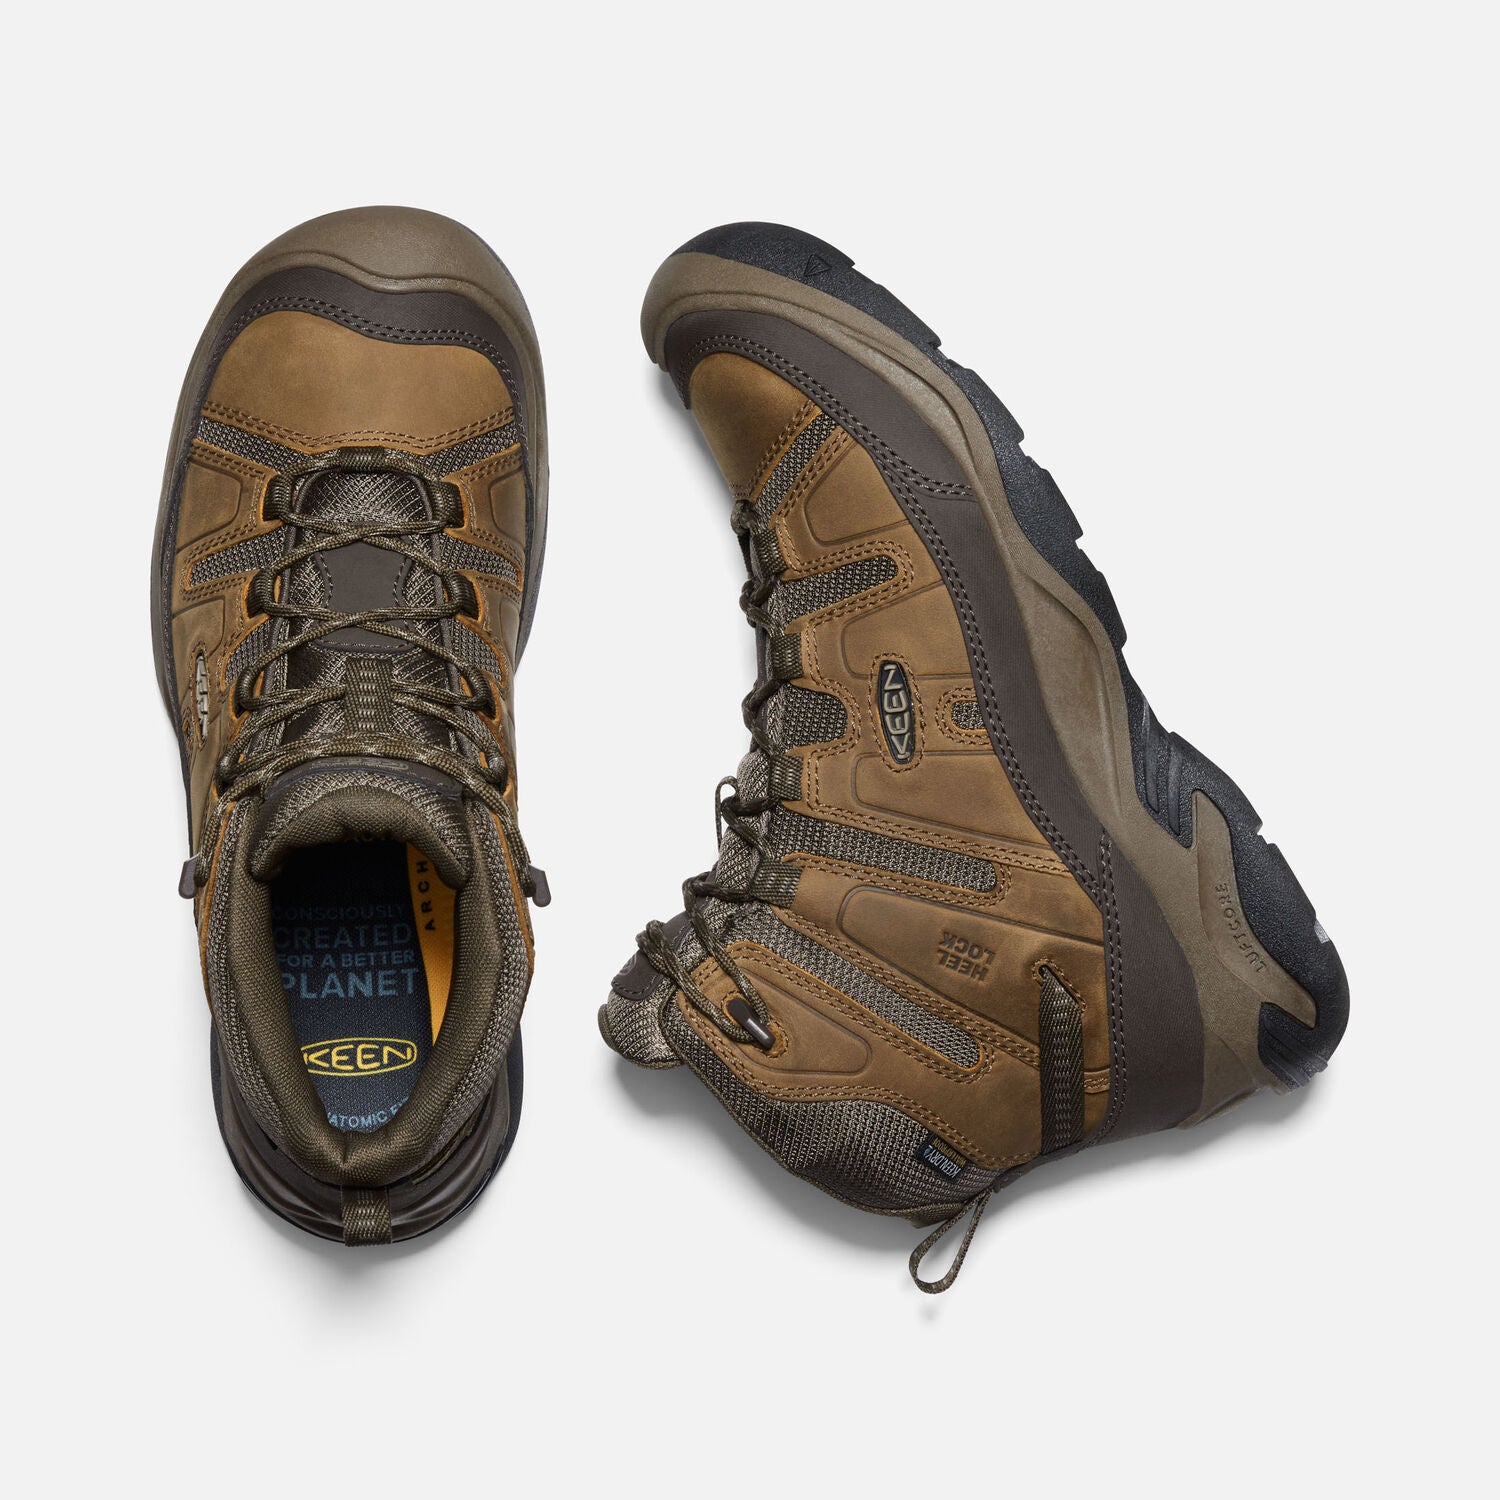 Keen Men's Circadia Waterproof Hiking Boot – Army Navy Now